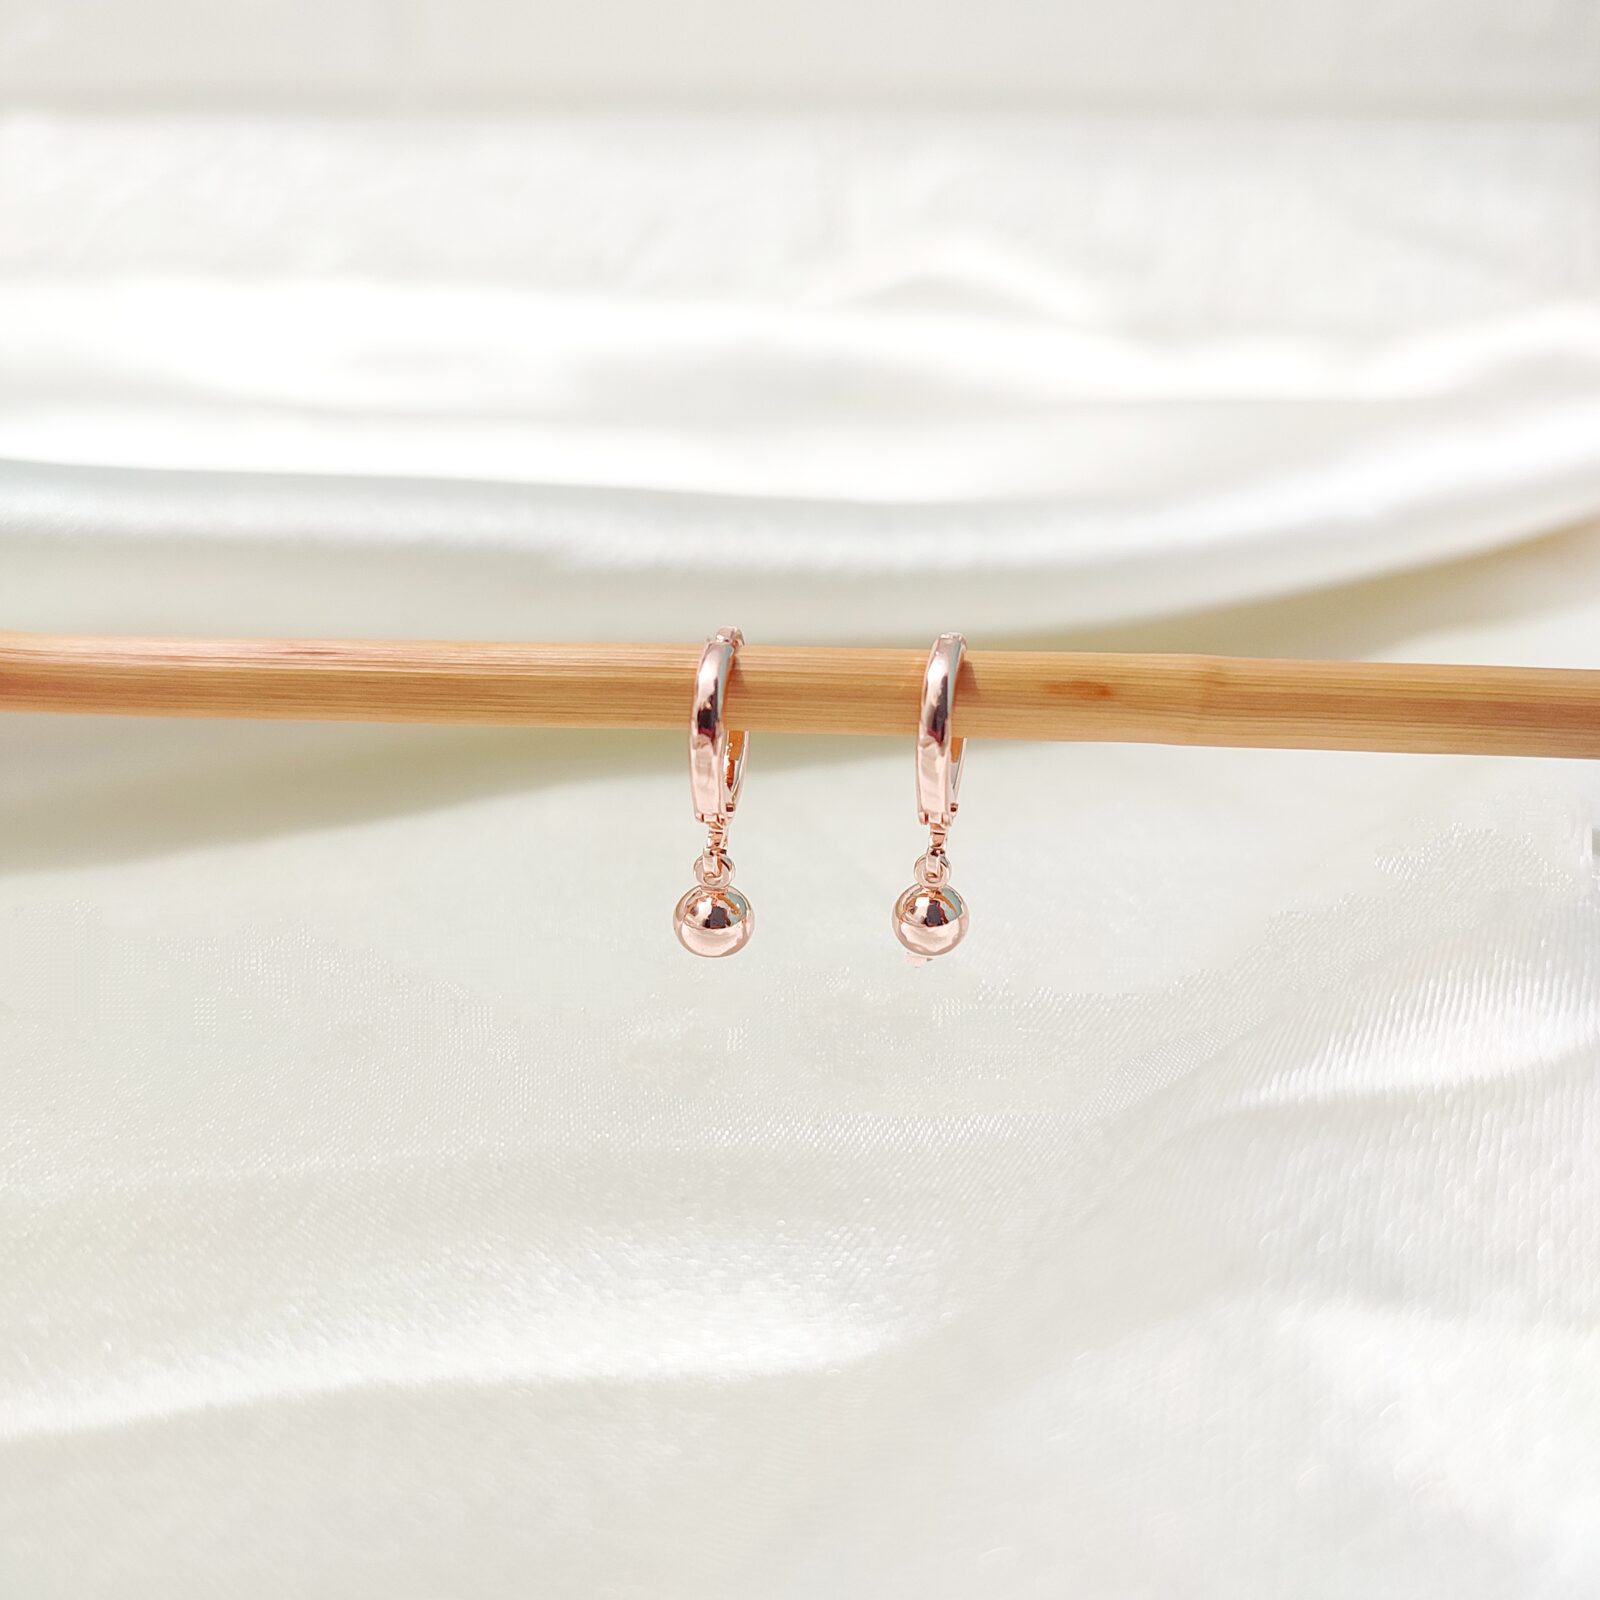 DIY Easy Small Hoop Earrings | Hammered Small Brass Gold Hoops | Latch Back Small  Hoop Earrings - YouTube